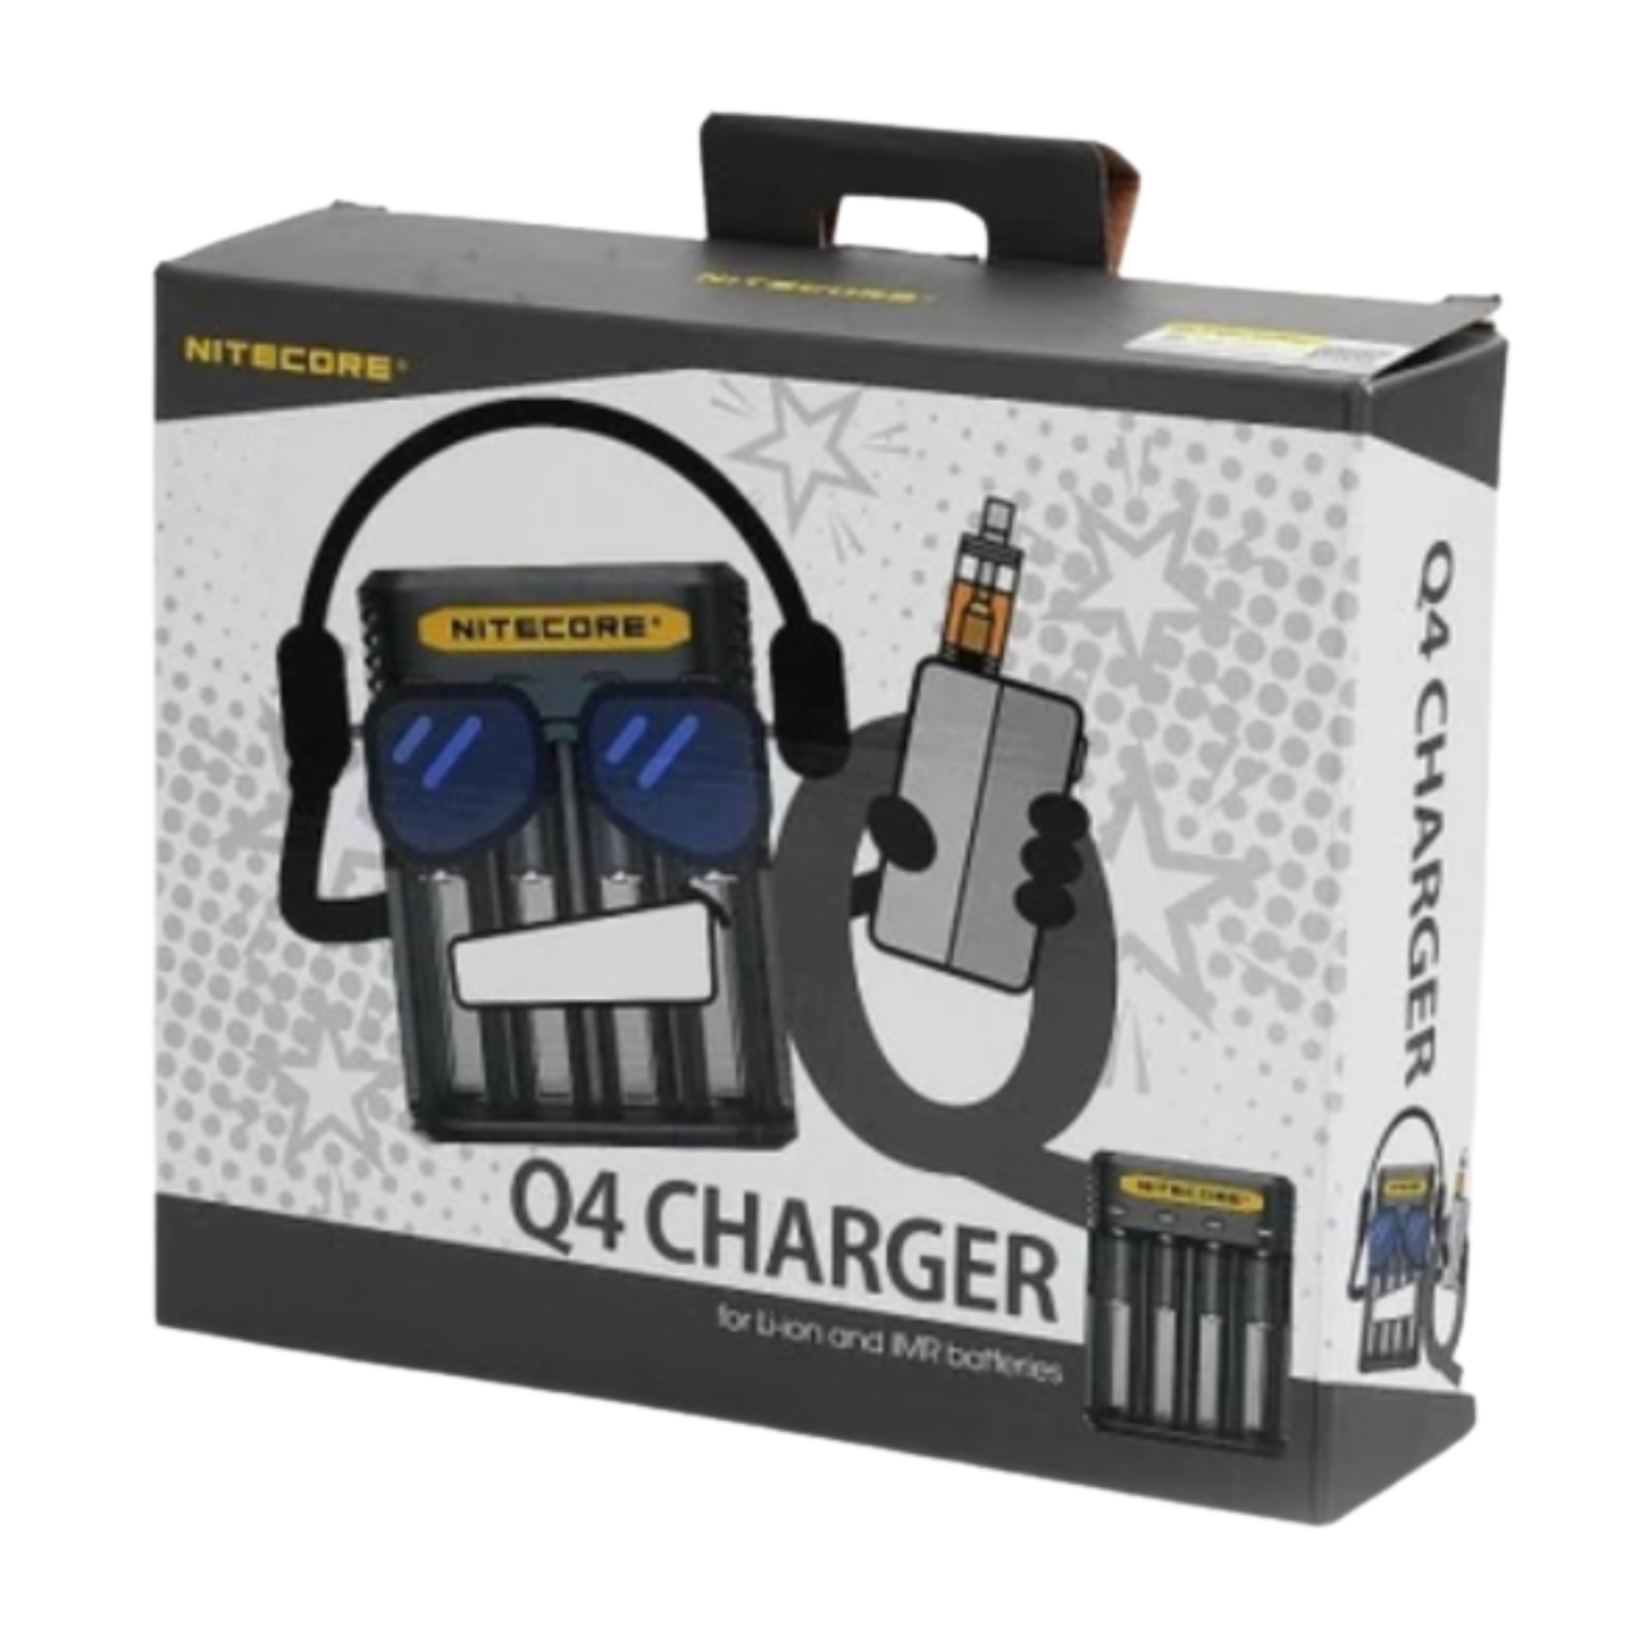 Nitecore Nitecore Q4 (Quad) Battery Charger